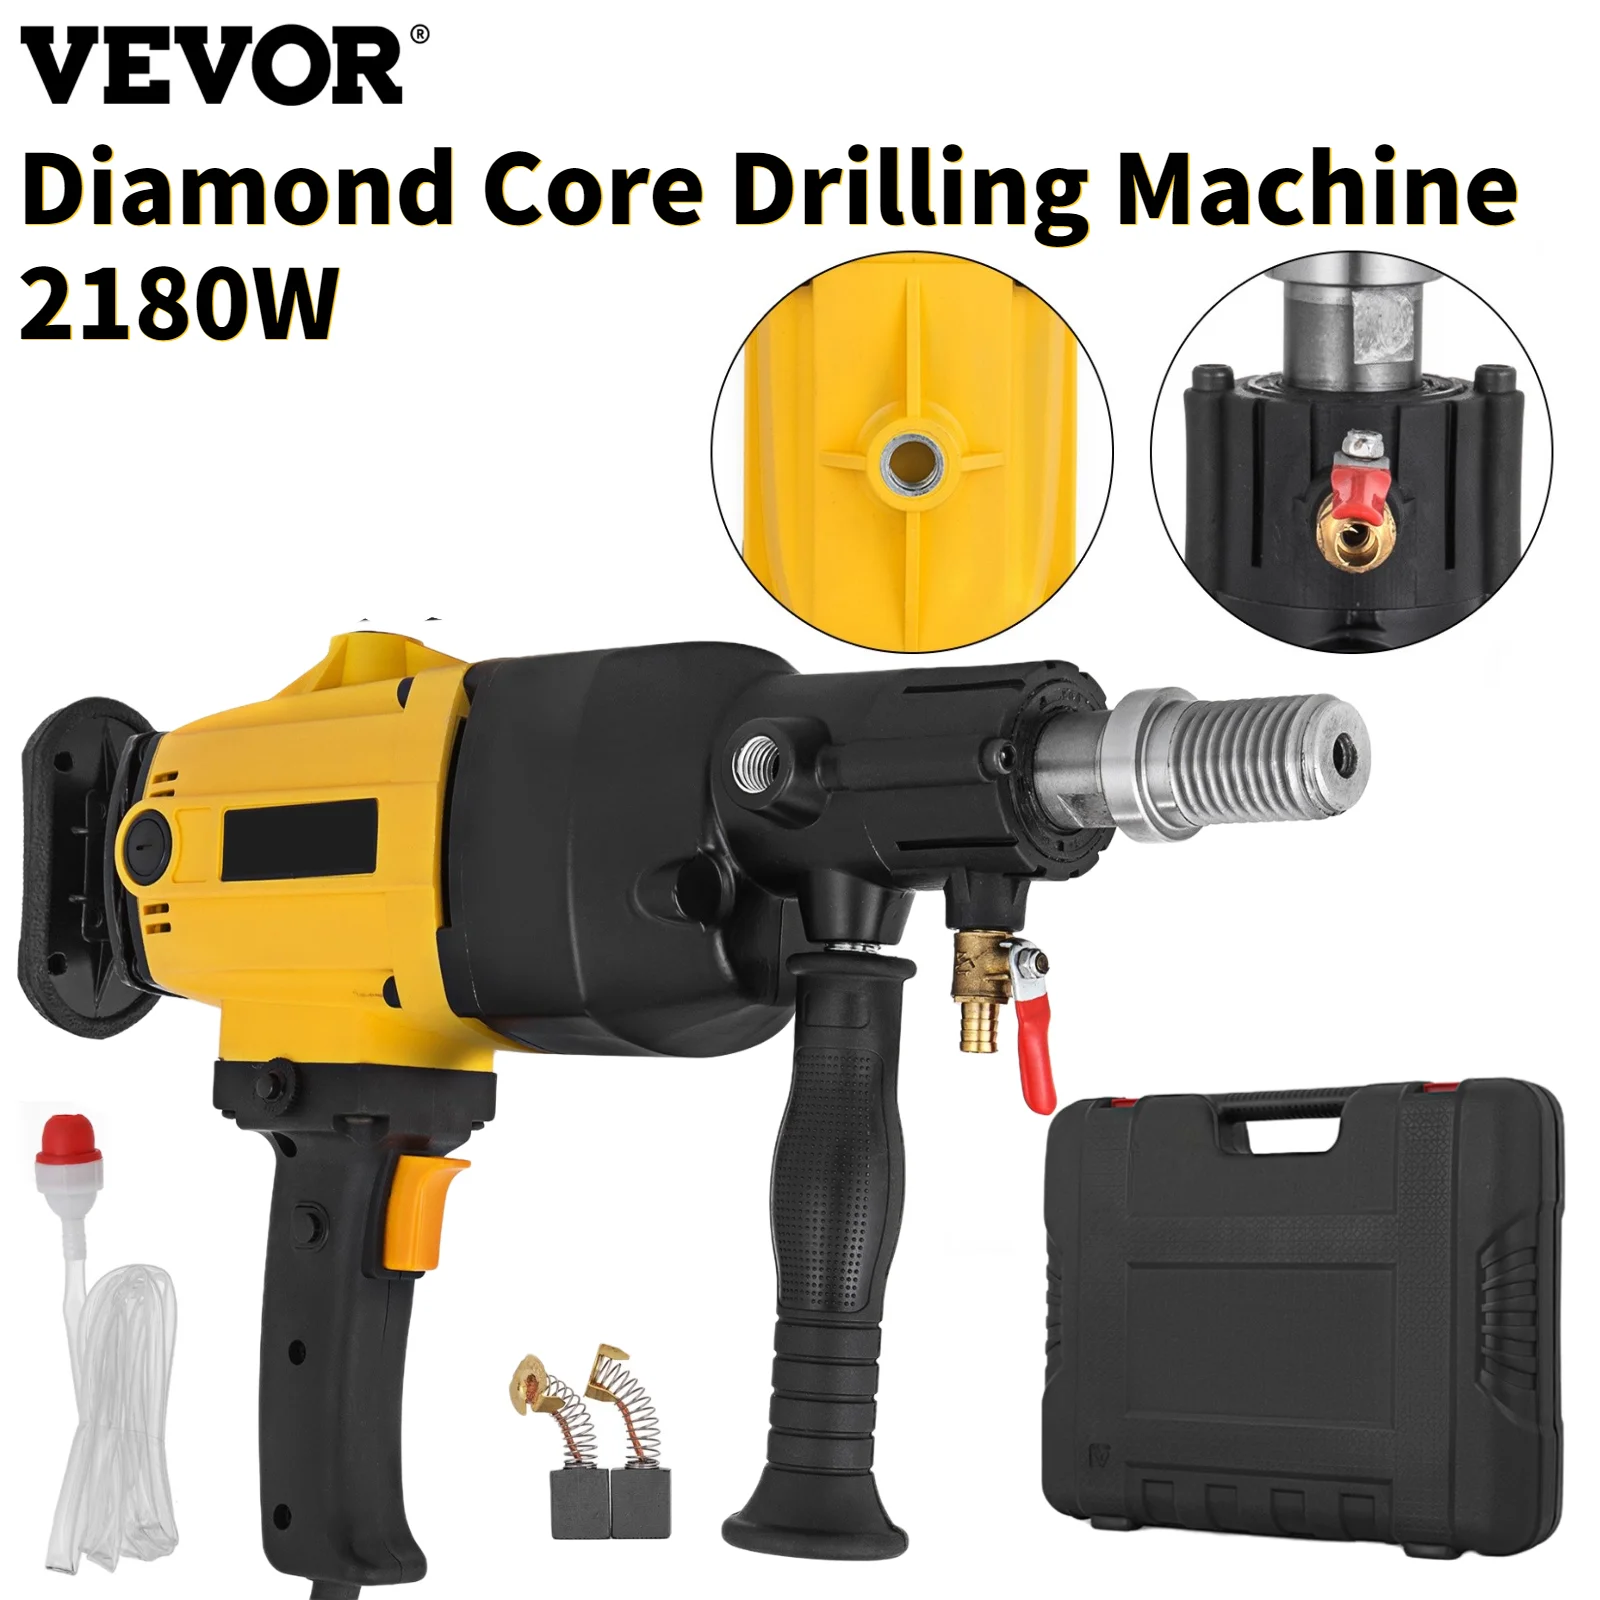 

VEVOR 2180W Diamond Core Drilling Machine Handheld Variable Speed Wet Dry Concrete Drill Rig for Brick Stone Ceramic Range 160mm